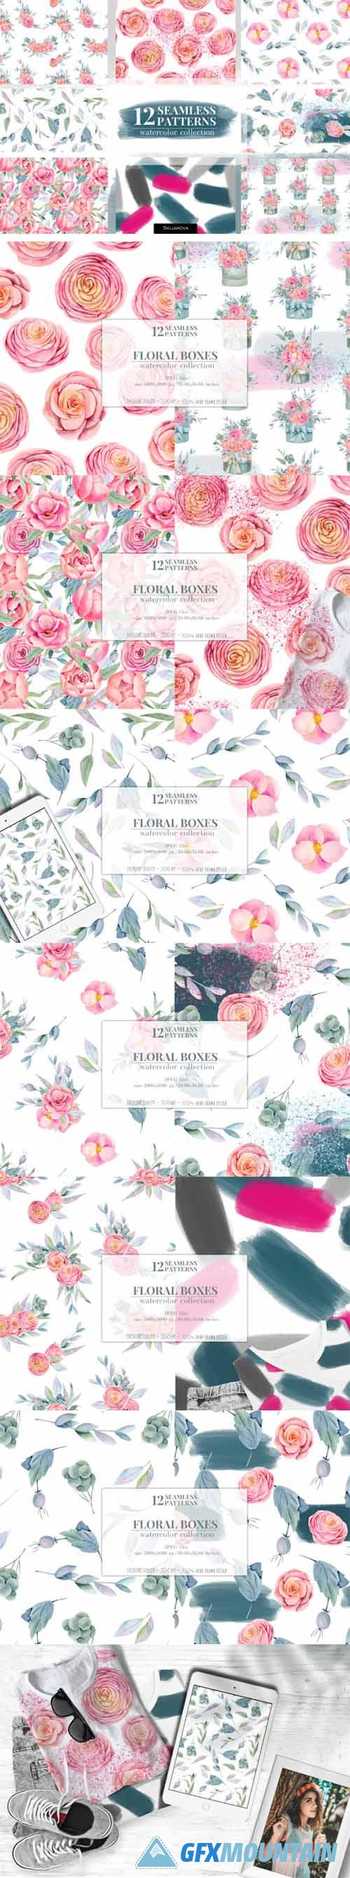 Floral Boxes Seamless Patterns Set 7063909